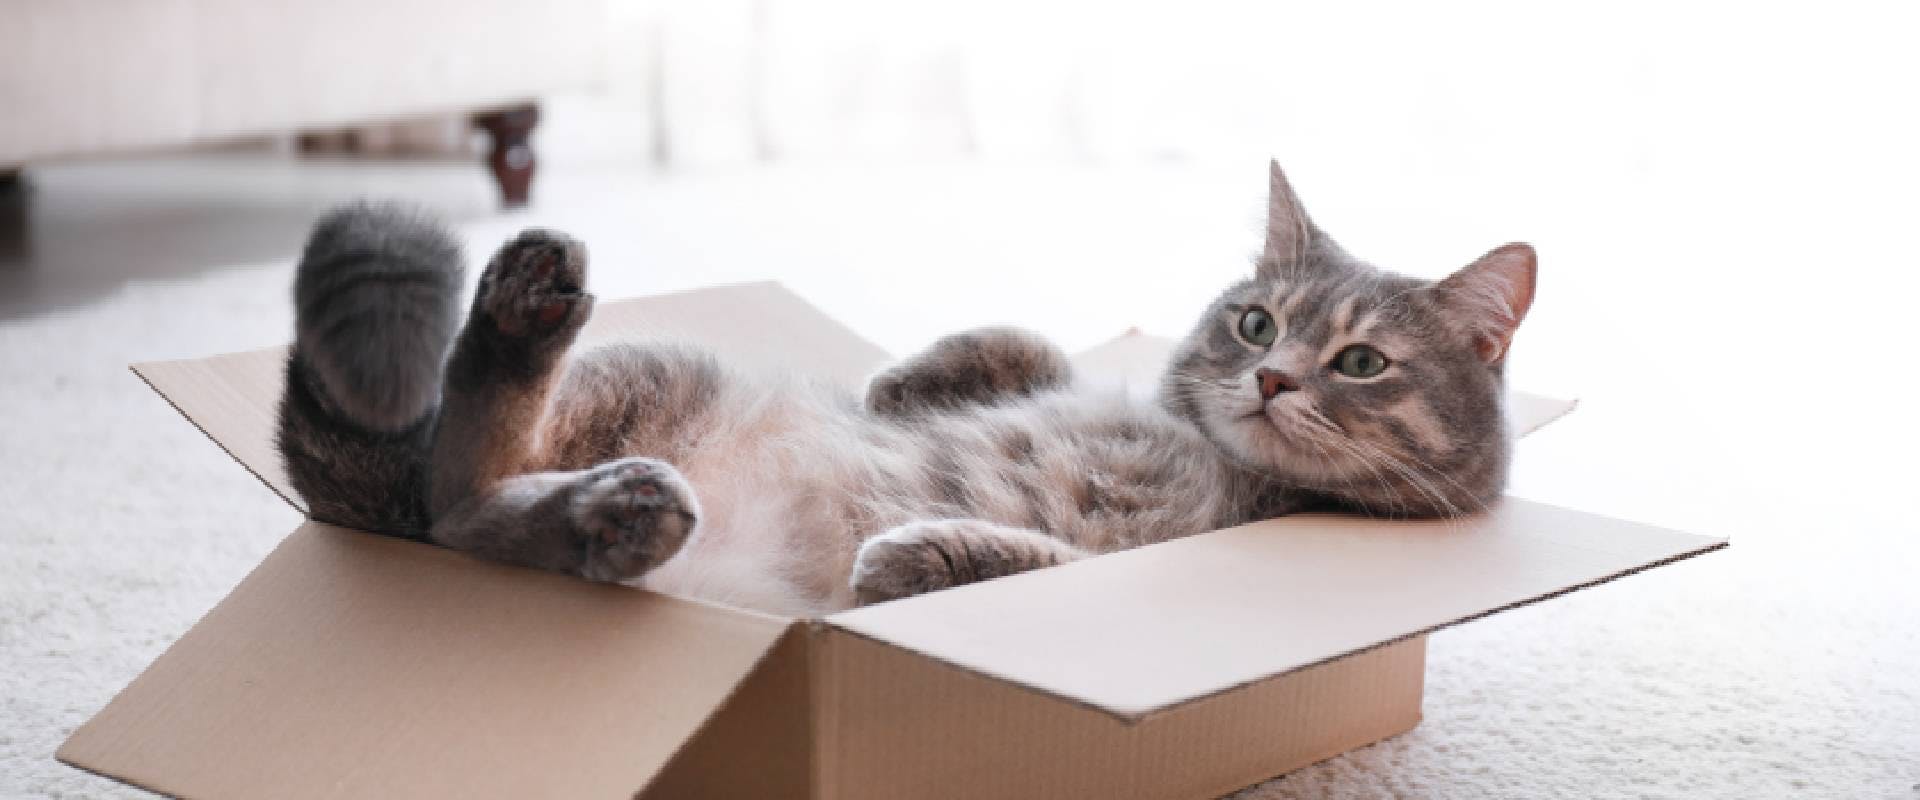 Cool cat laying in a cardboard box